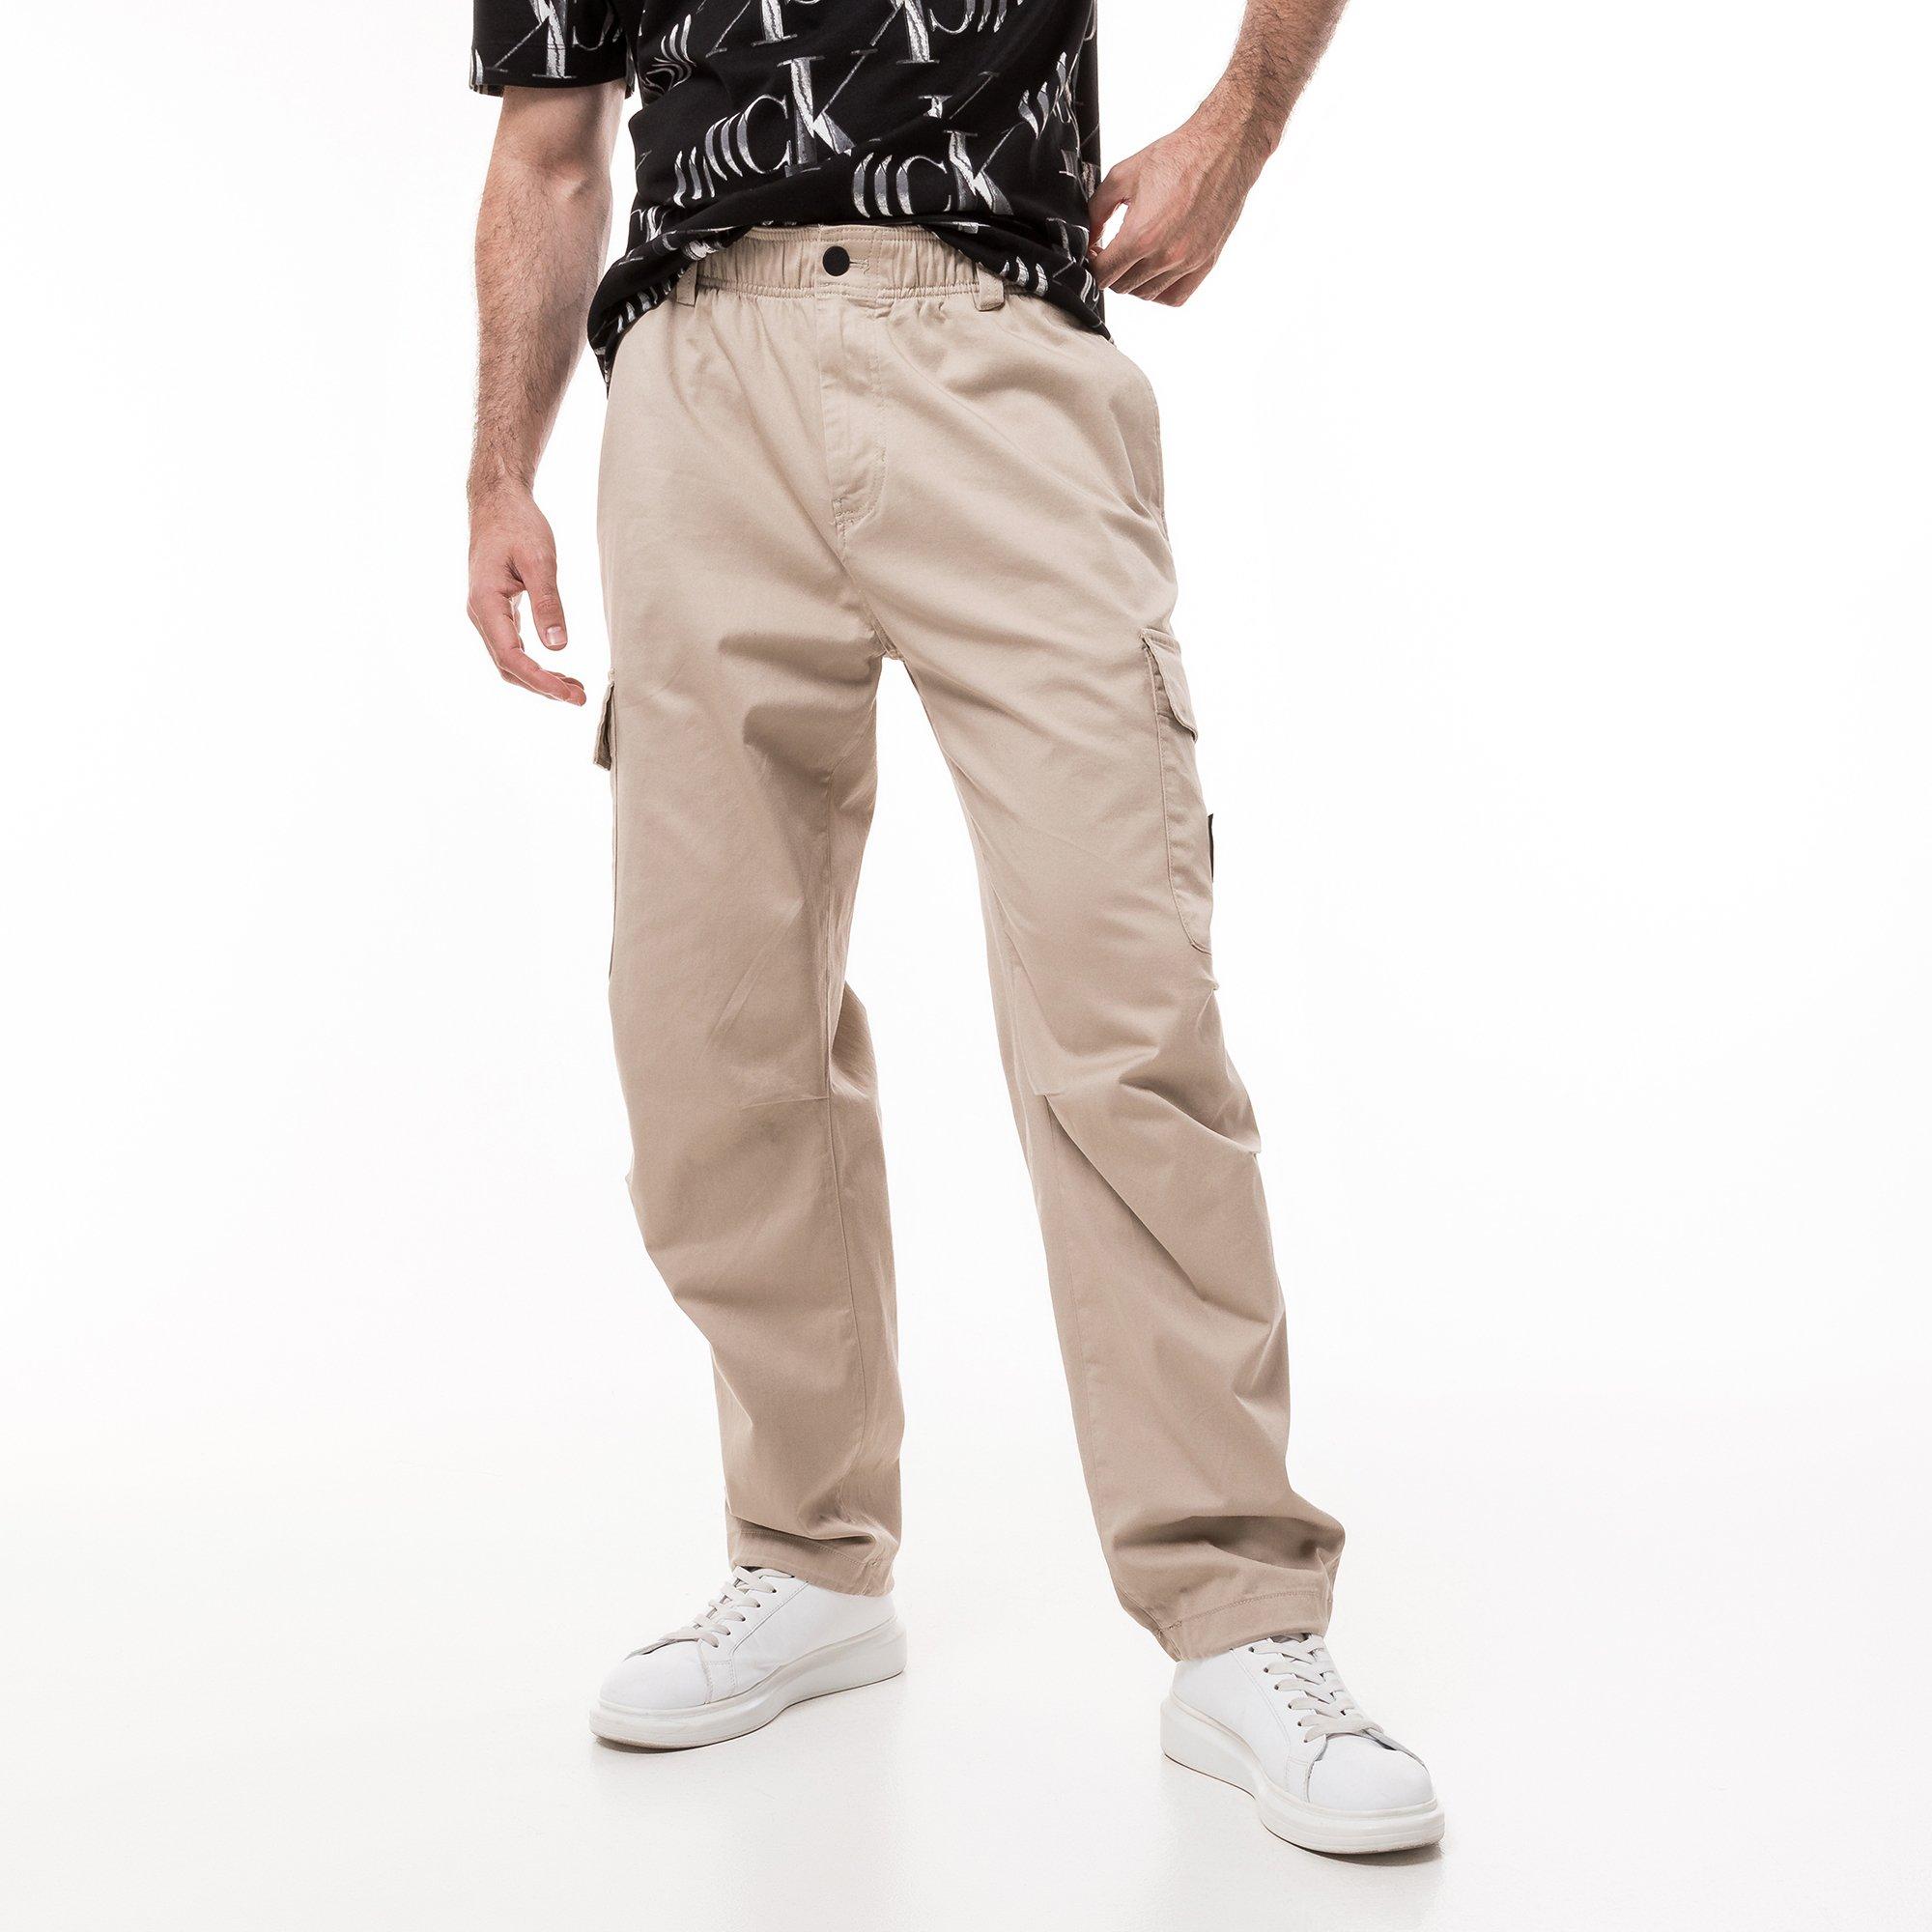 Calvin CARGO Klein REGULAR Fit | online kaufen Jeans - MANOR Regular Cargohose, PANT